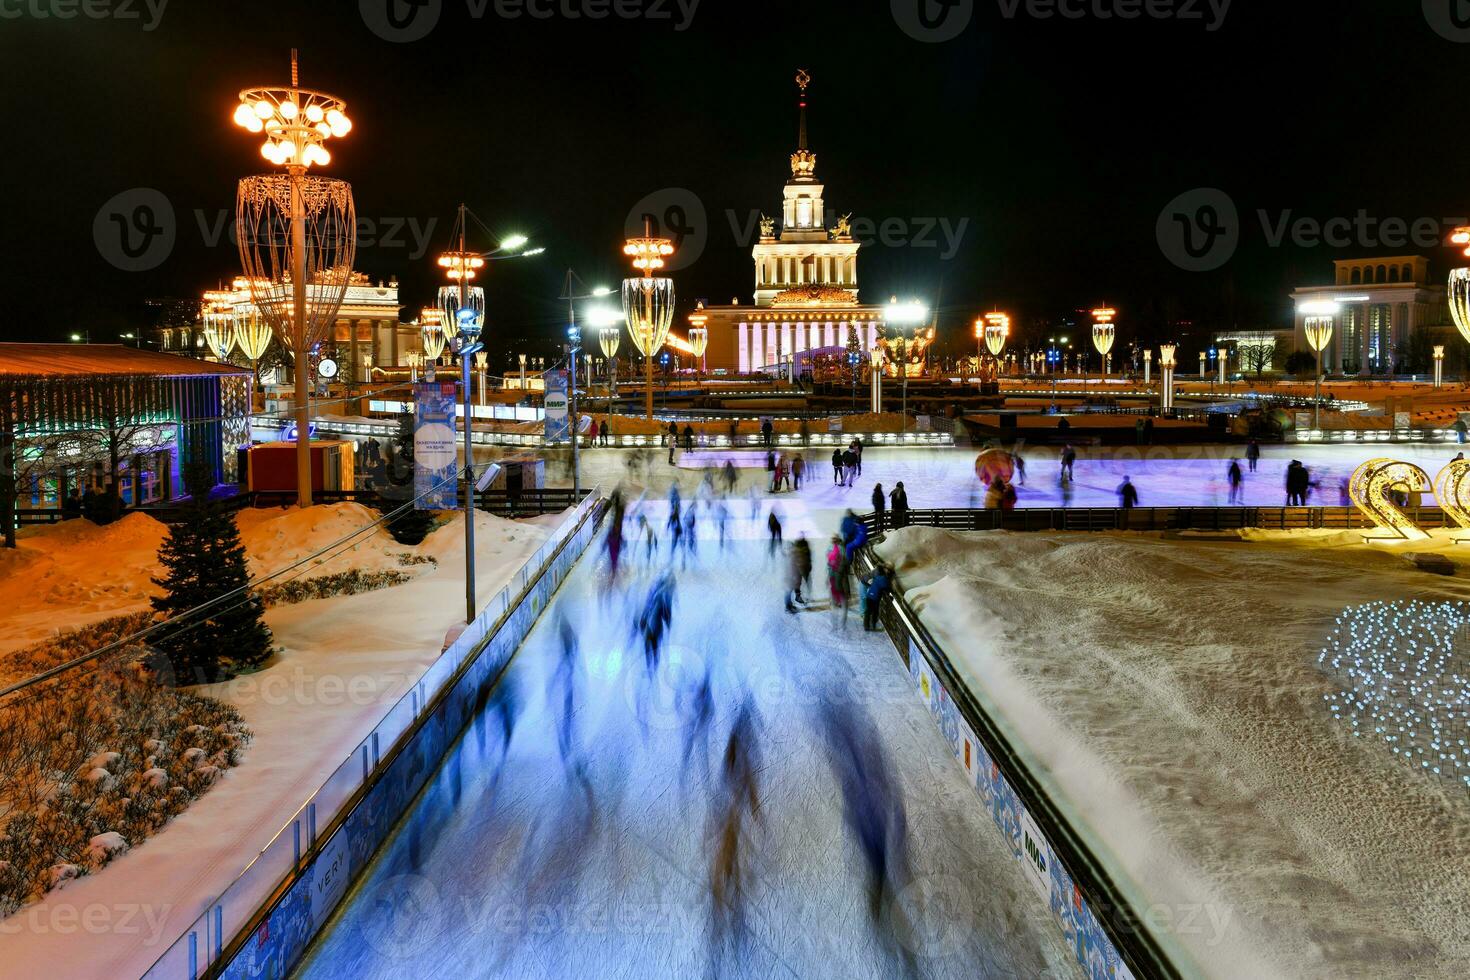 is rink på vdnkh - Moskva, ryssland foto